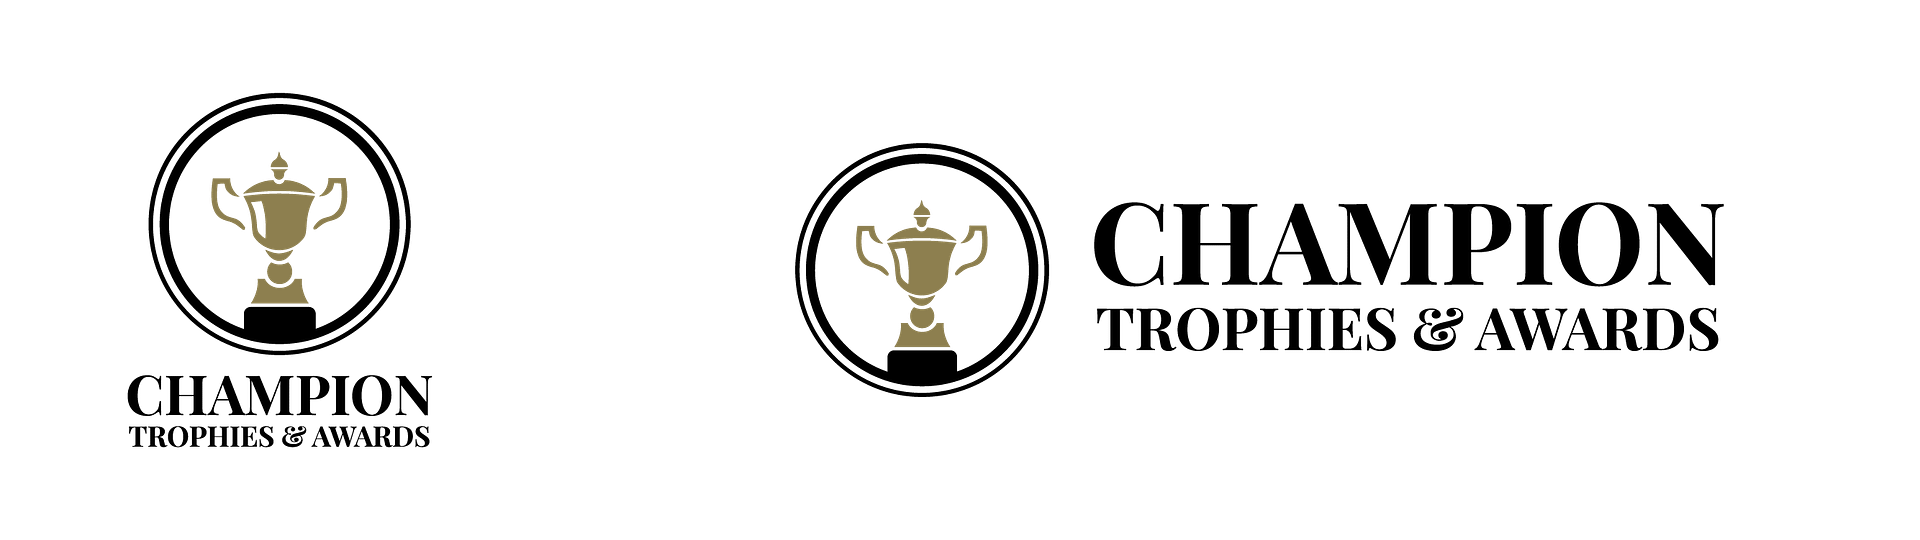 Champion Trophies and Awards regular logo and landscape logo